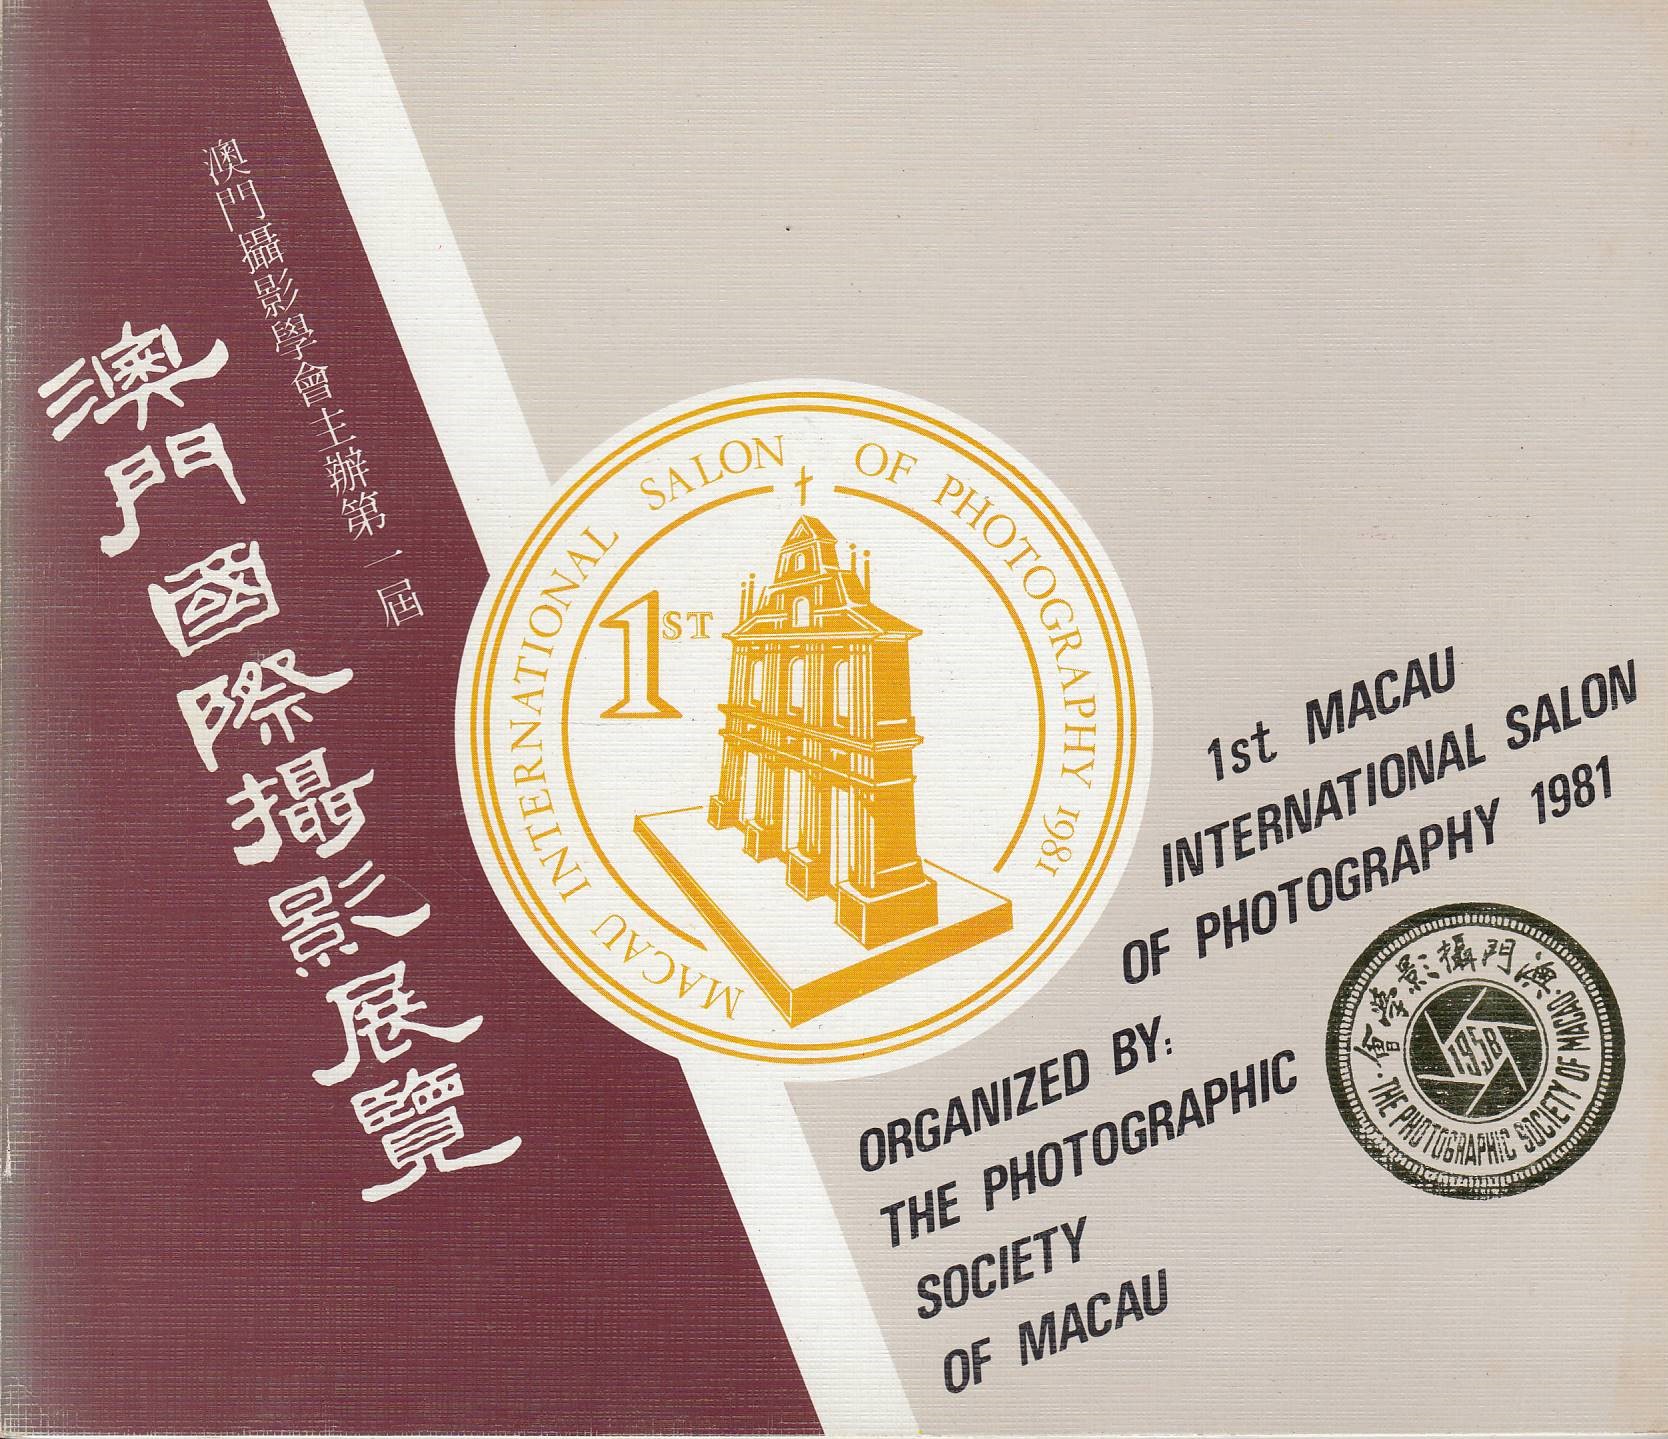 1 st MACAU INTERNATIONAL SALON OF PHOTOGRPHY 1981